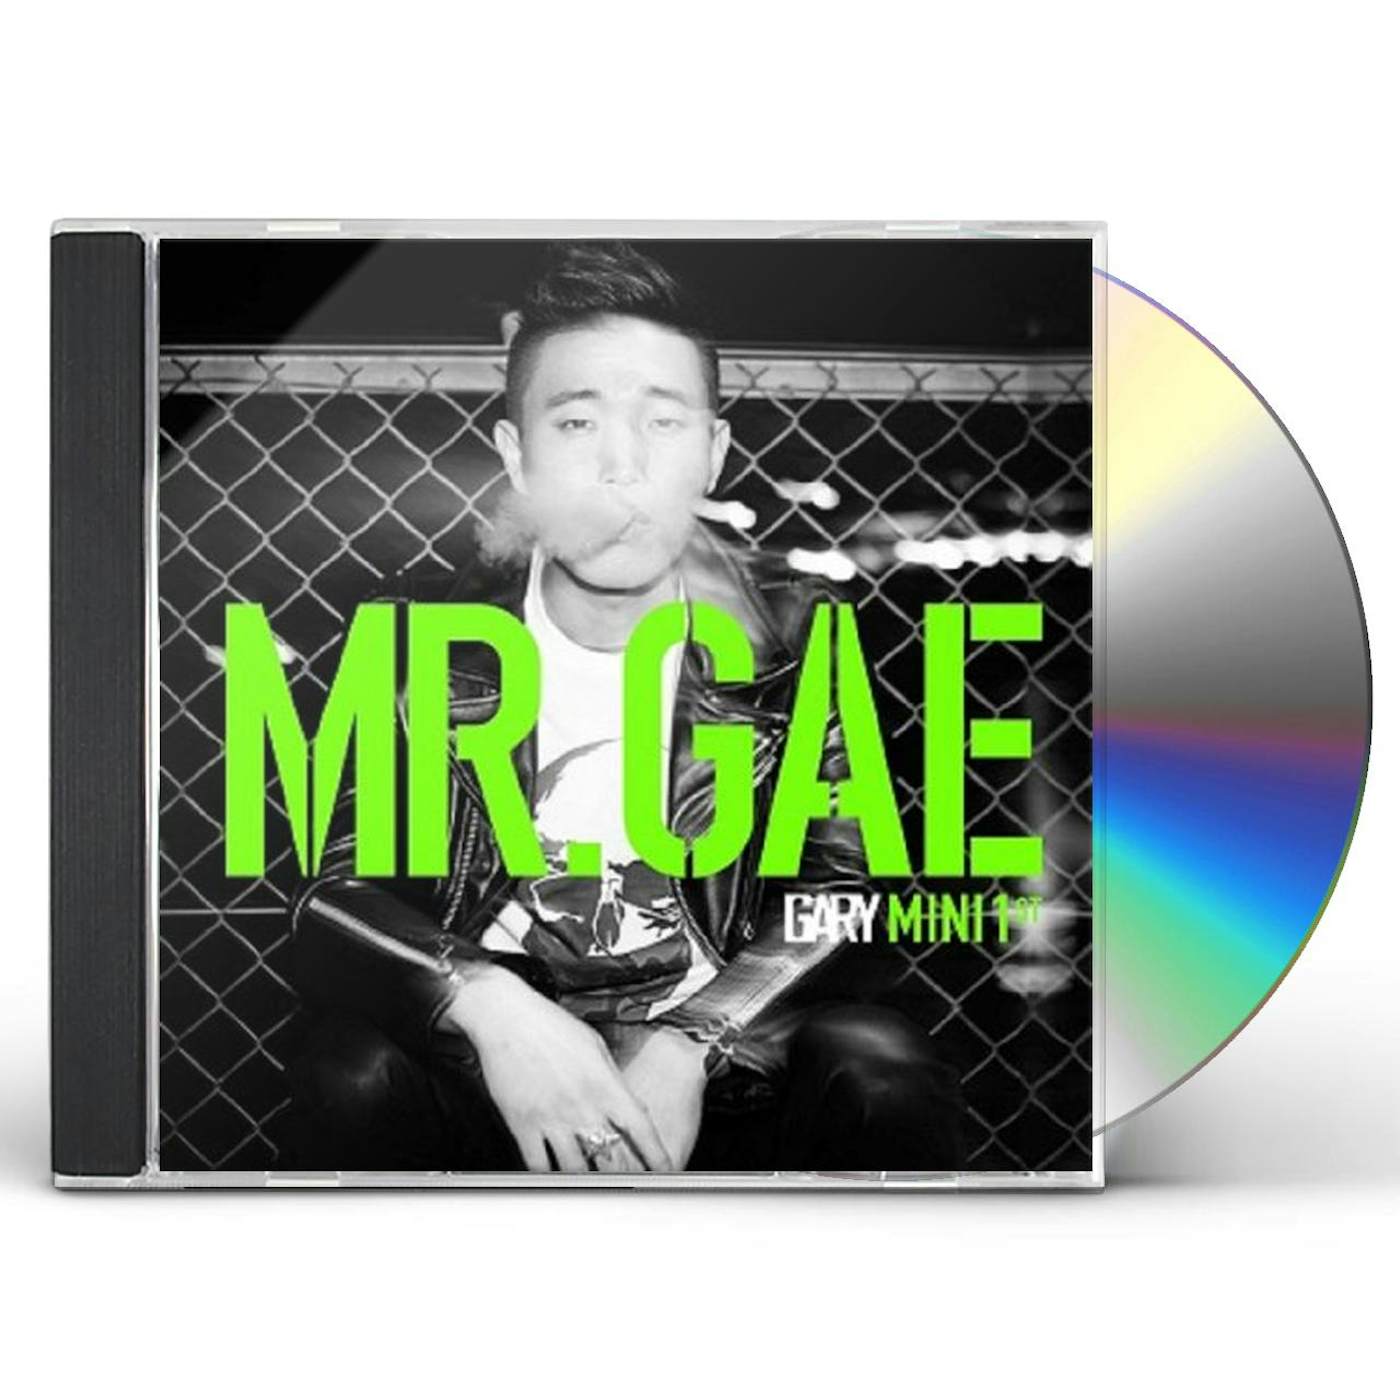 GARY MR.GAE (MINI ALBUM) CD